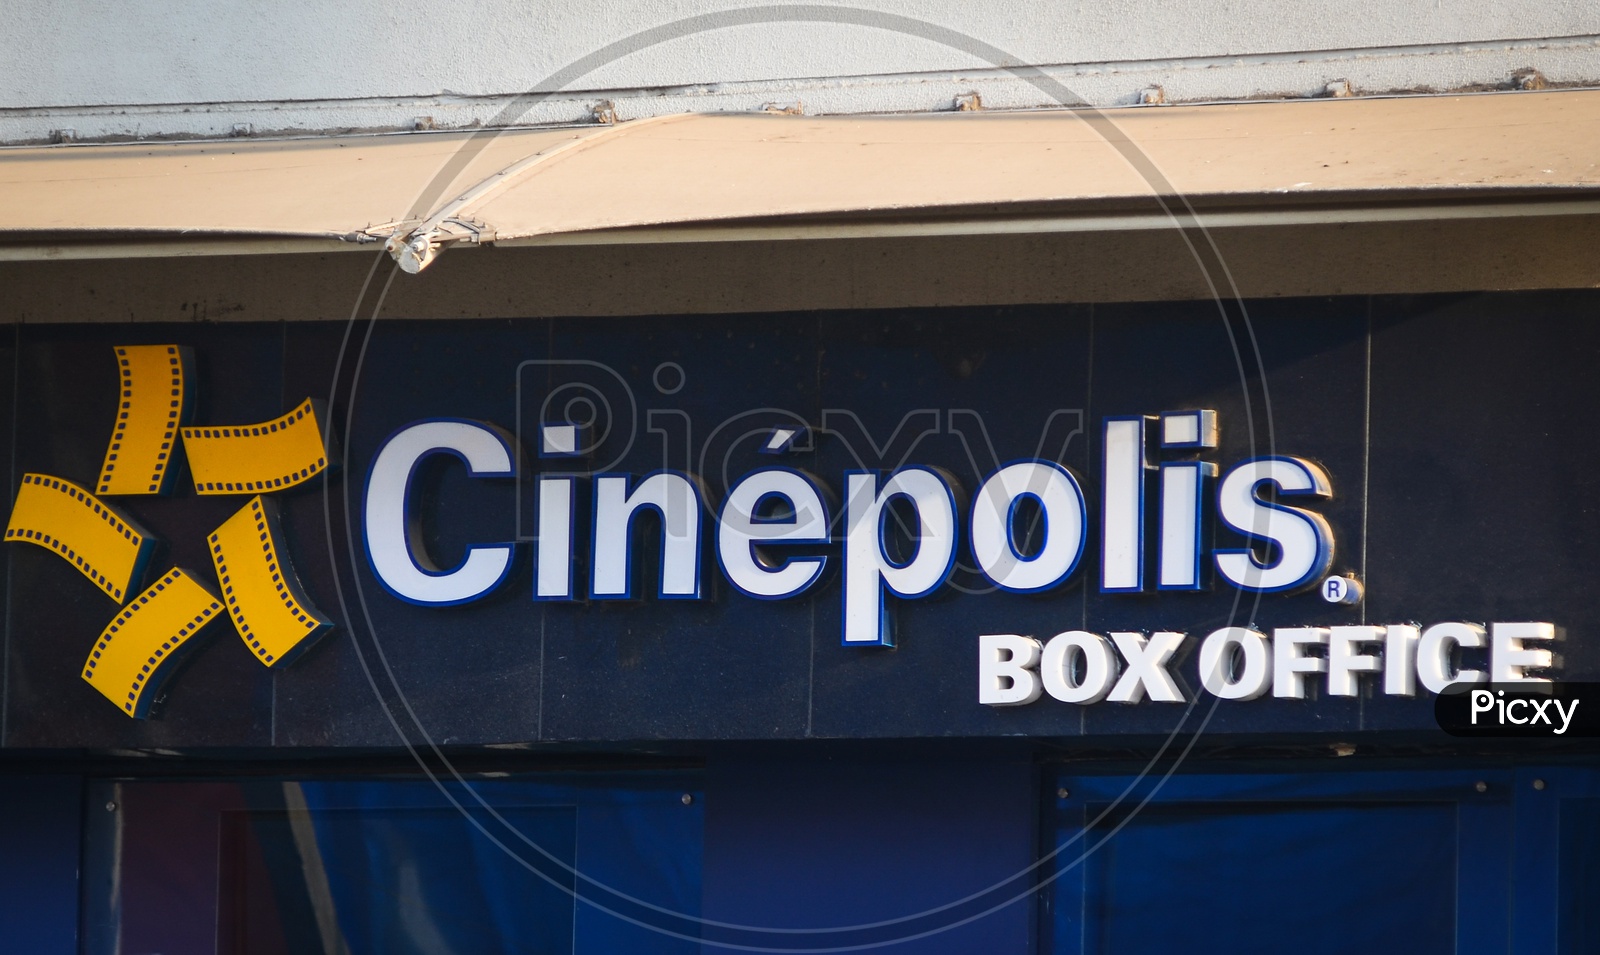 Cinepolis box office